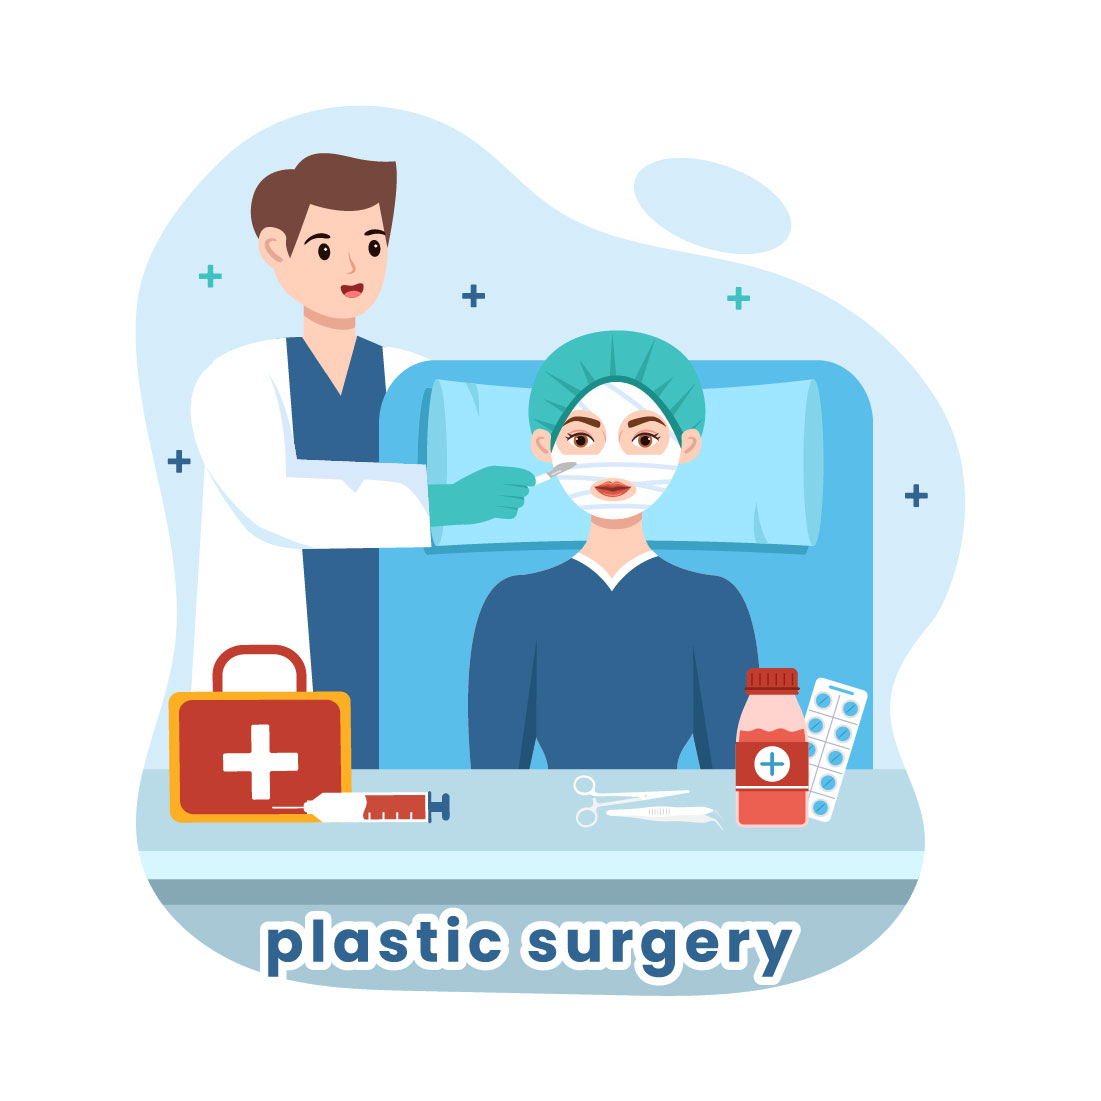 12 Plastic Surgery Illustration cover image.